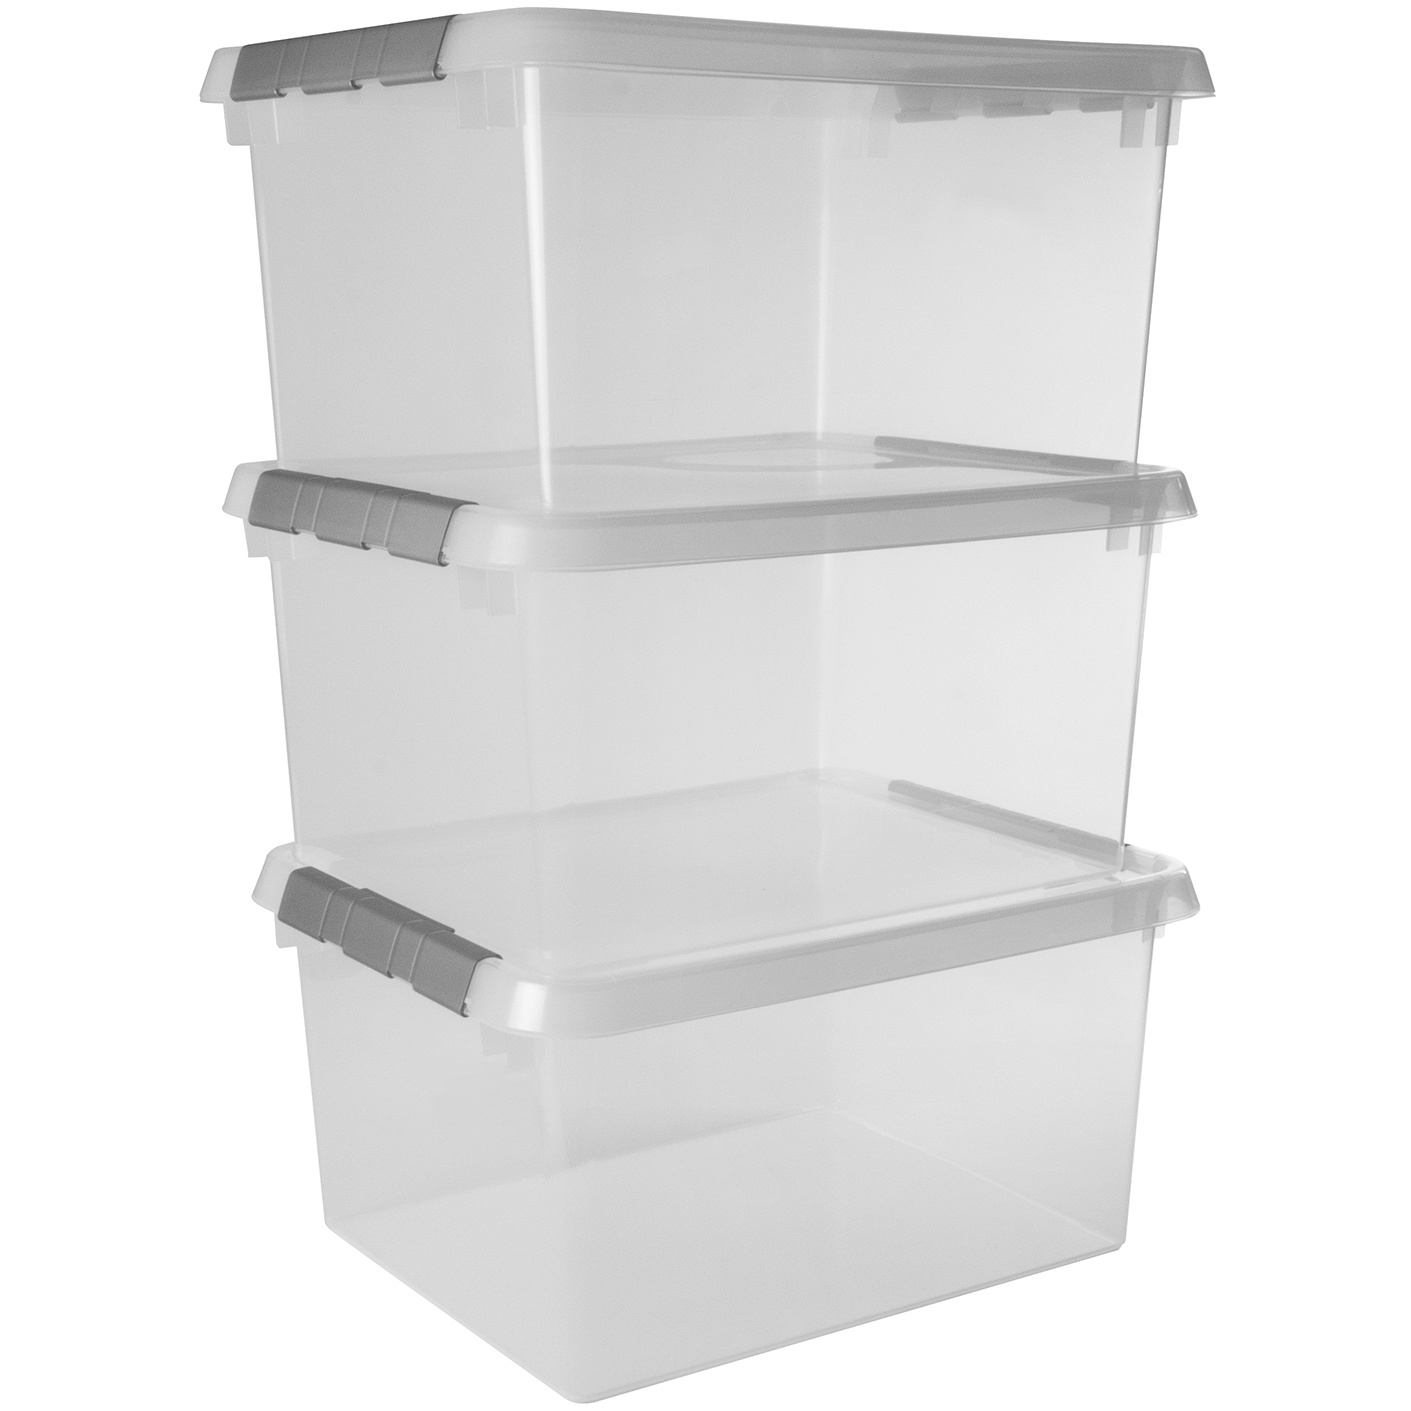 Comfort line storage box set of 3 - 36L transparent metallic